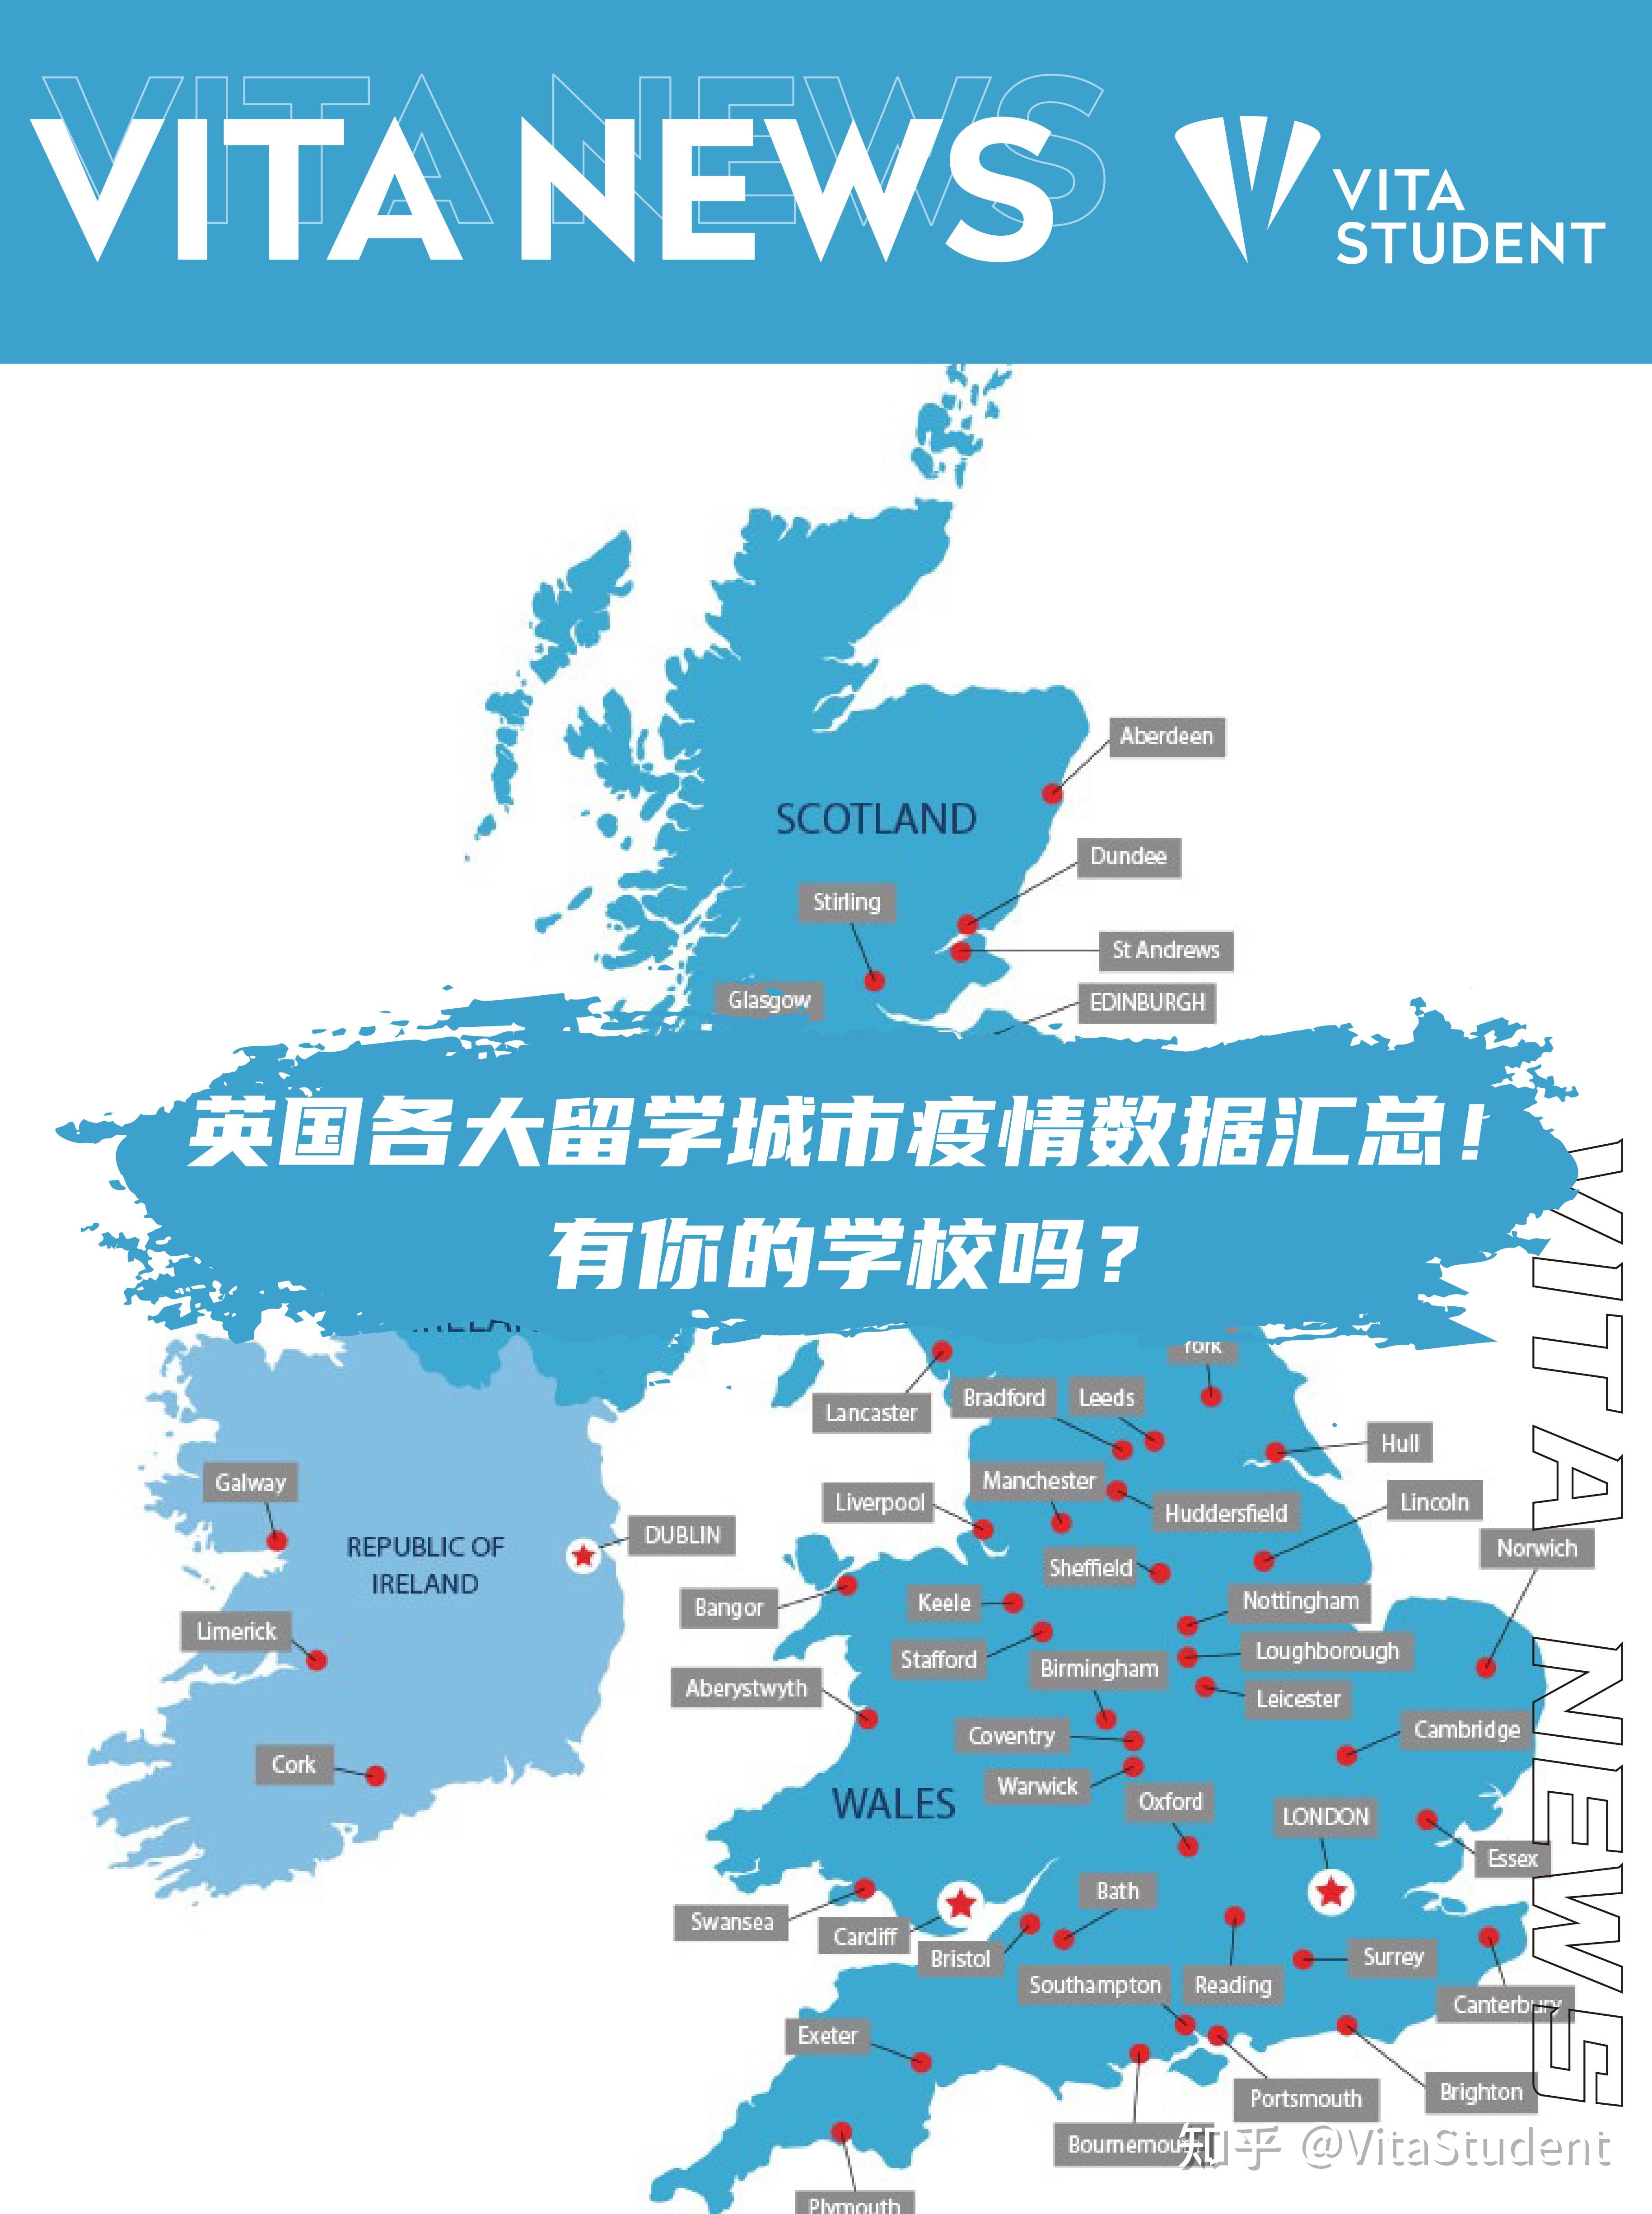 【vita news】英国各大留学城市疫情数据汇总!有你的学校吗?